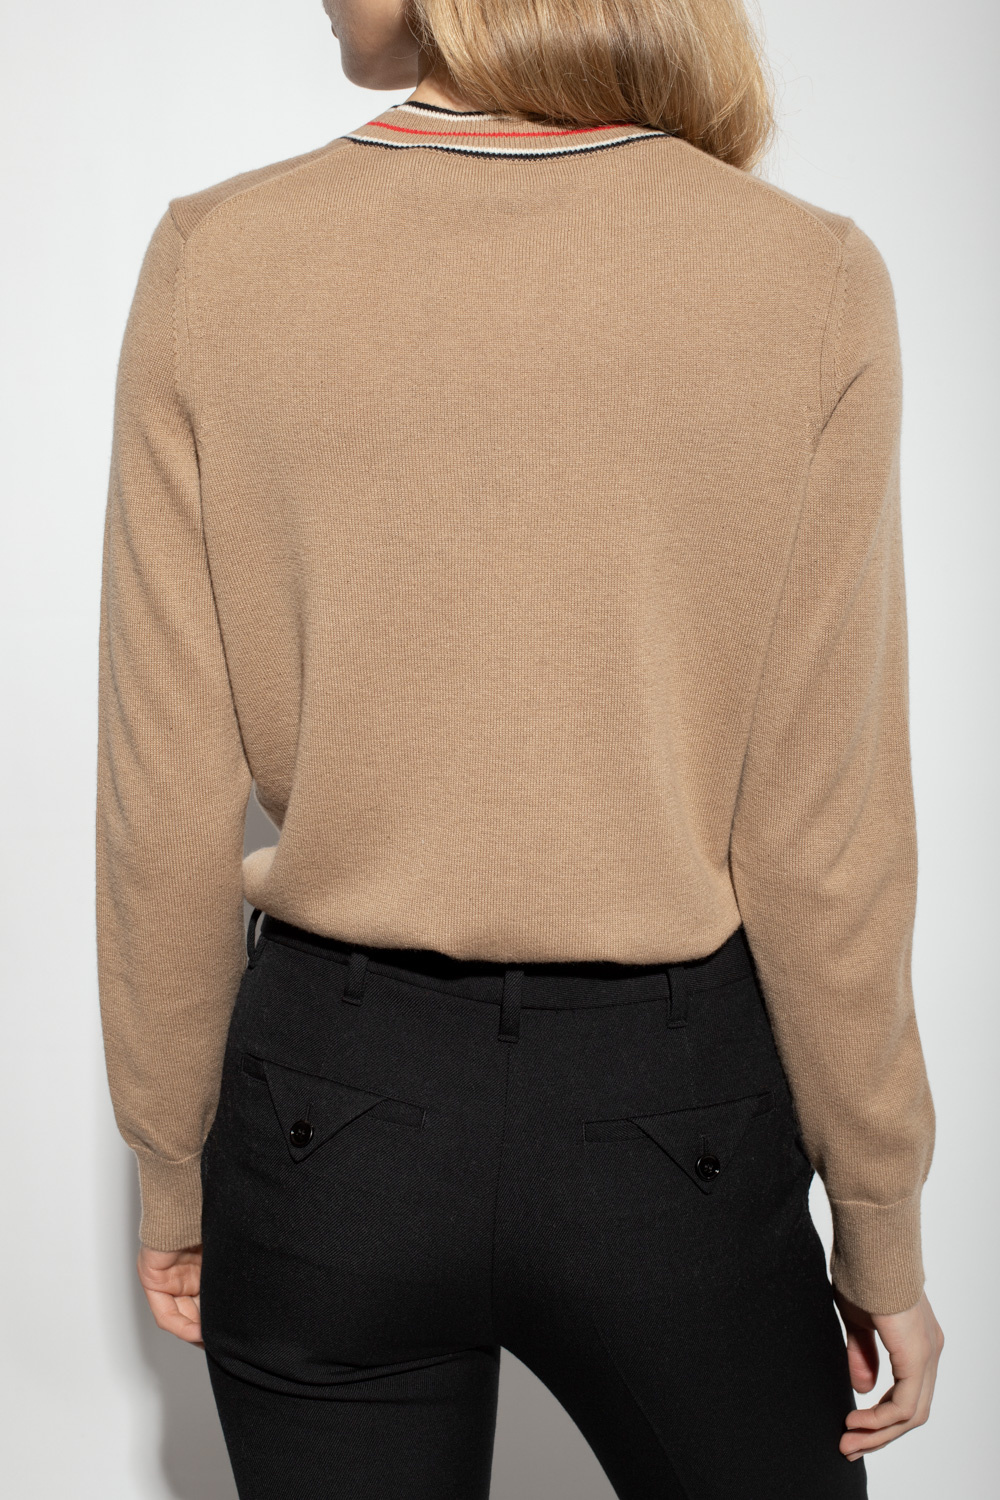 Burberry ‘Tilda’ cashmere sweater